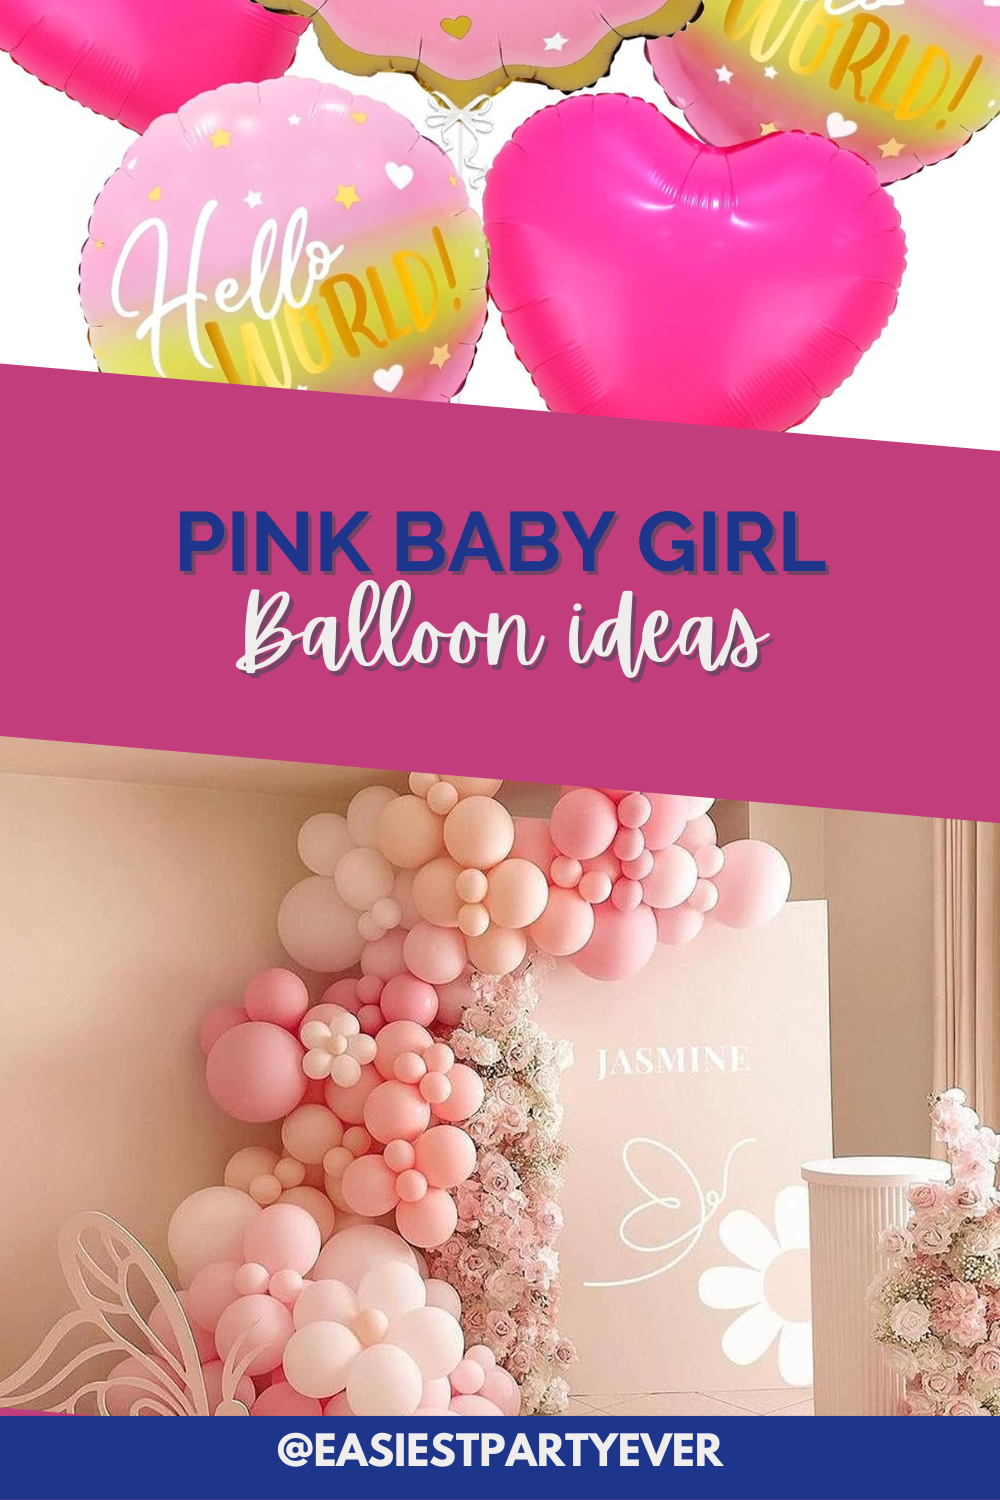 Precious pink baby girl balloons you’ll love